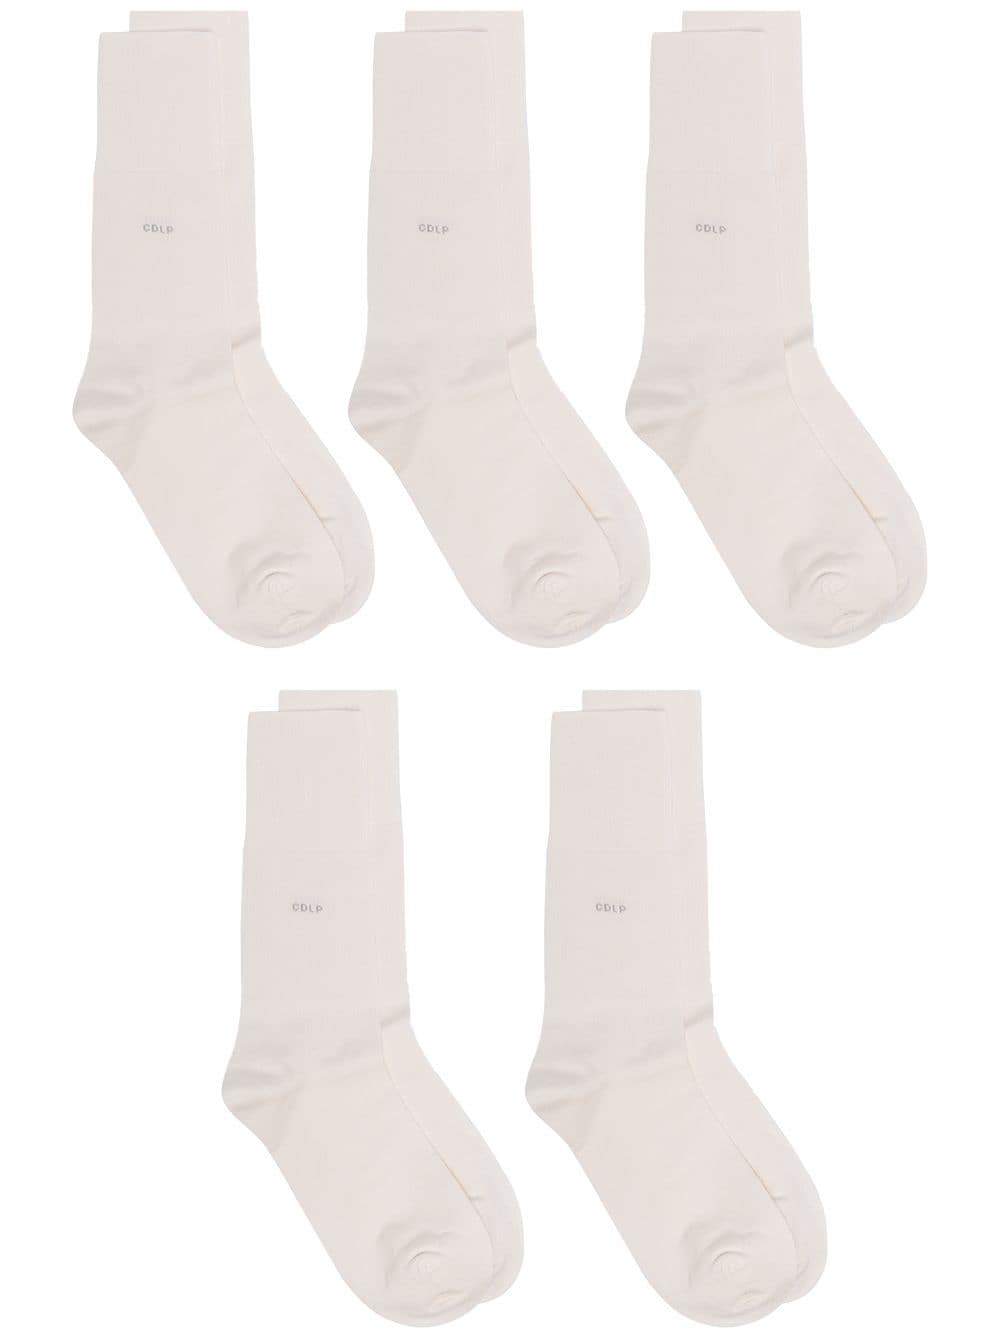 фото Cdlp комплект из пяти пар носков с логотипом